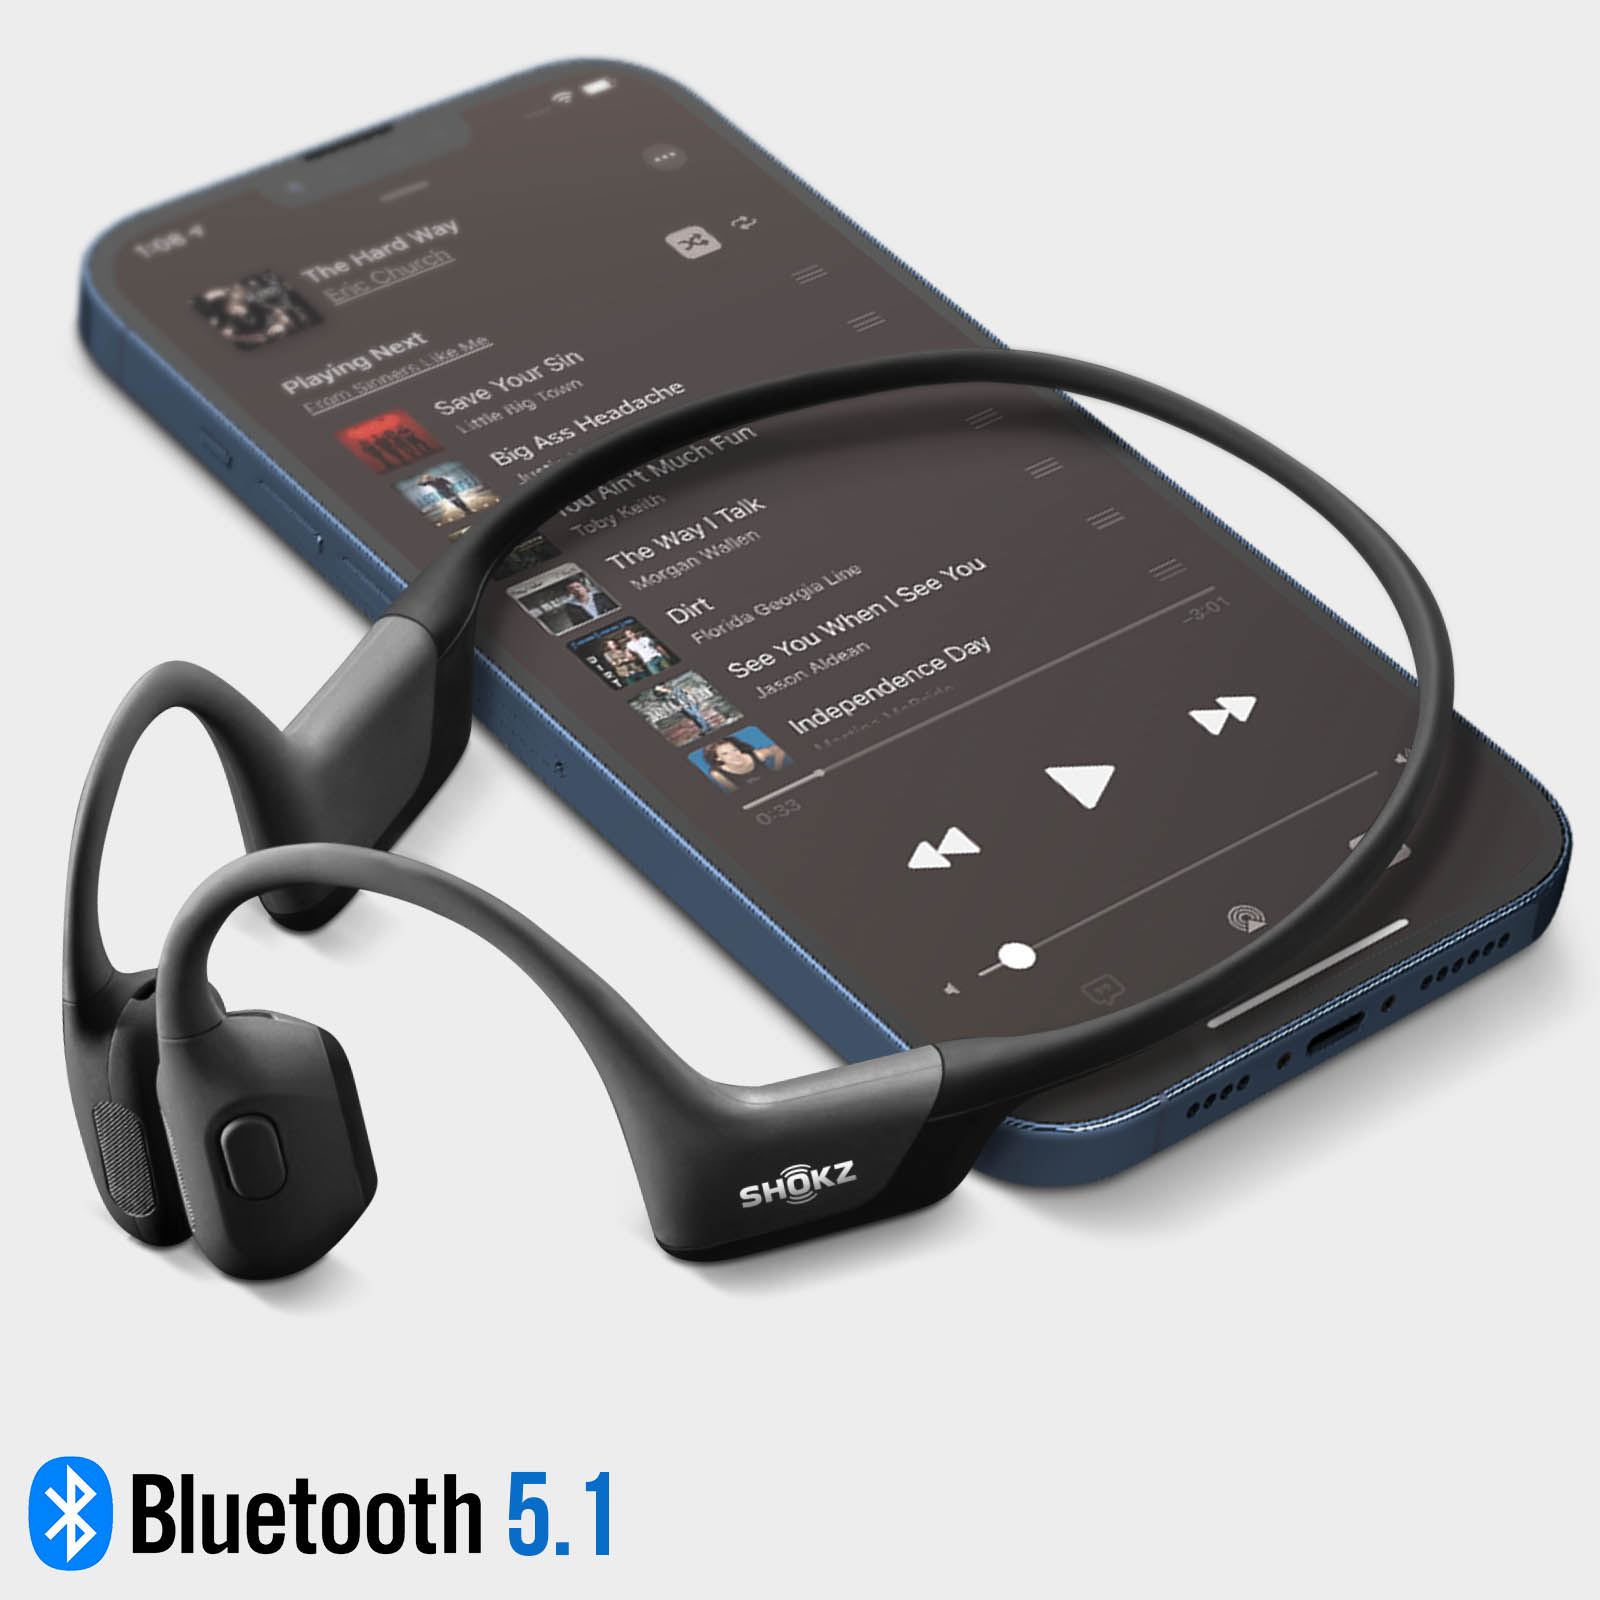 Casque Conduction Osseuse Bluetooth 5.0 Sport